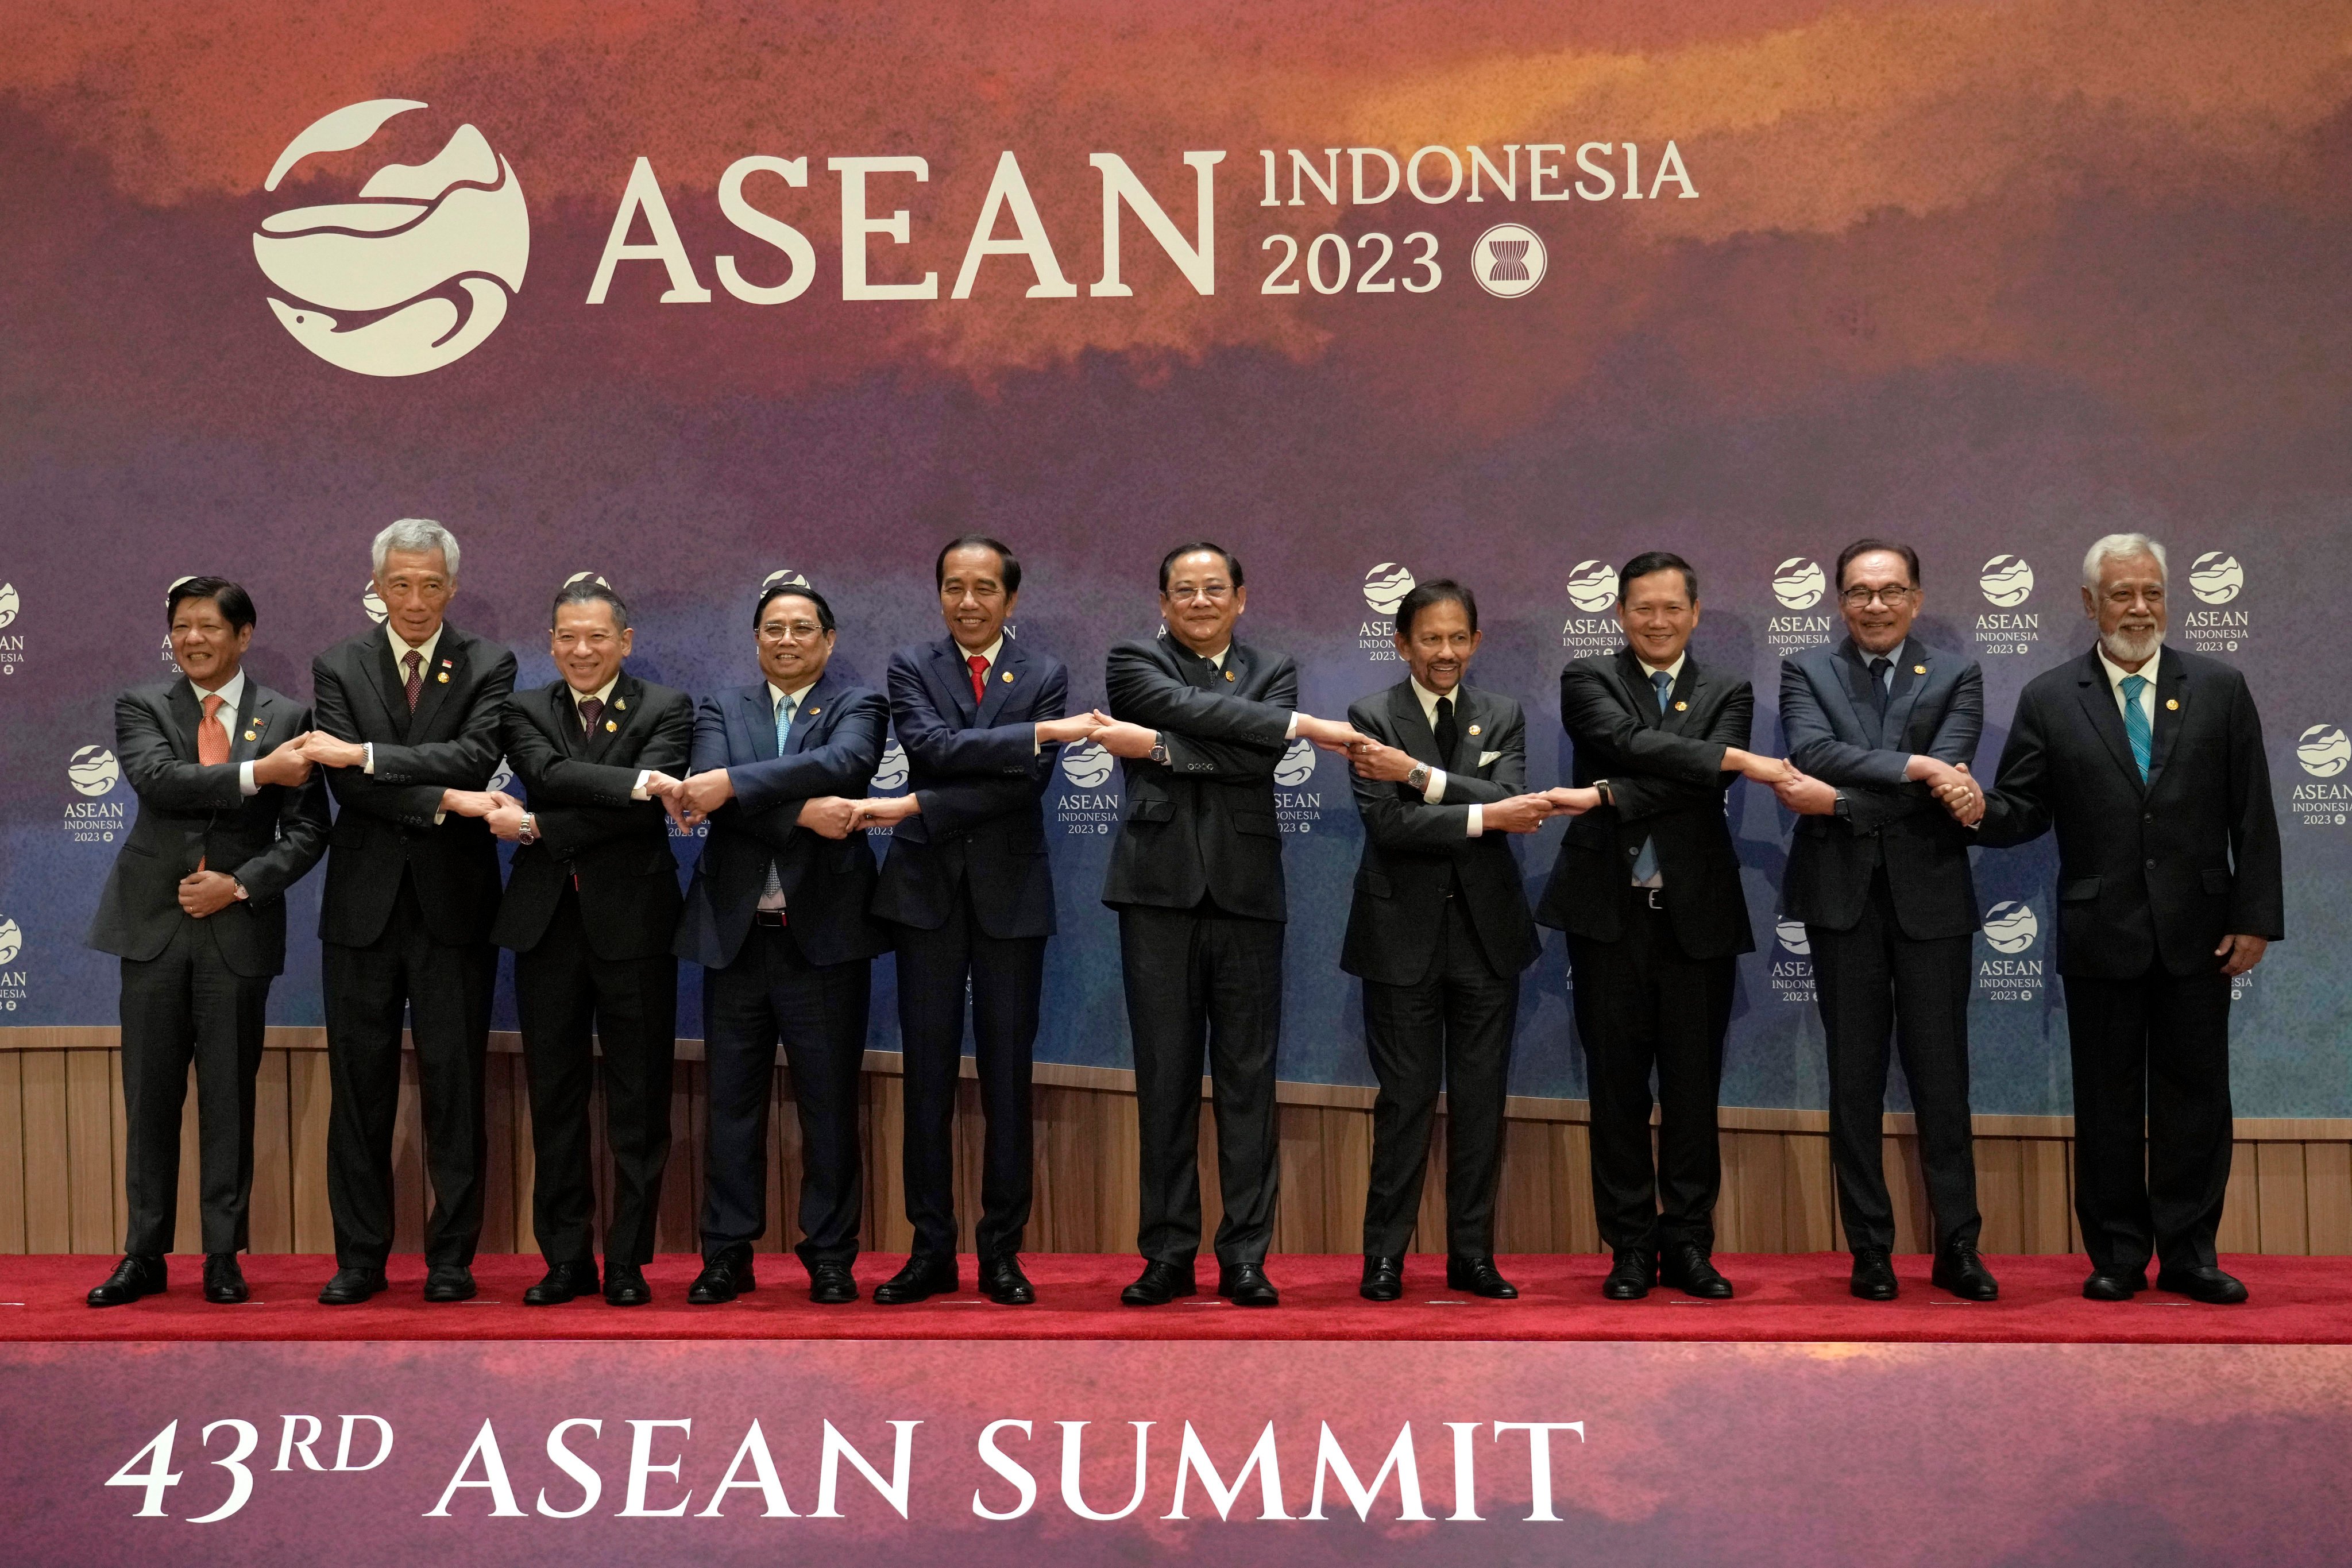 Asean leaders at the Asean summit in Jakarta, Indonesia, in September 2023. Photo: AP